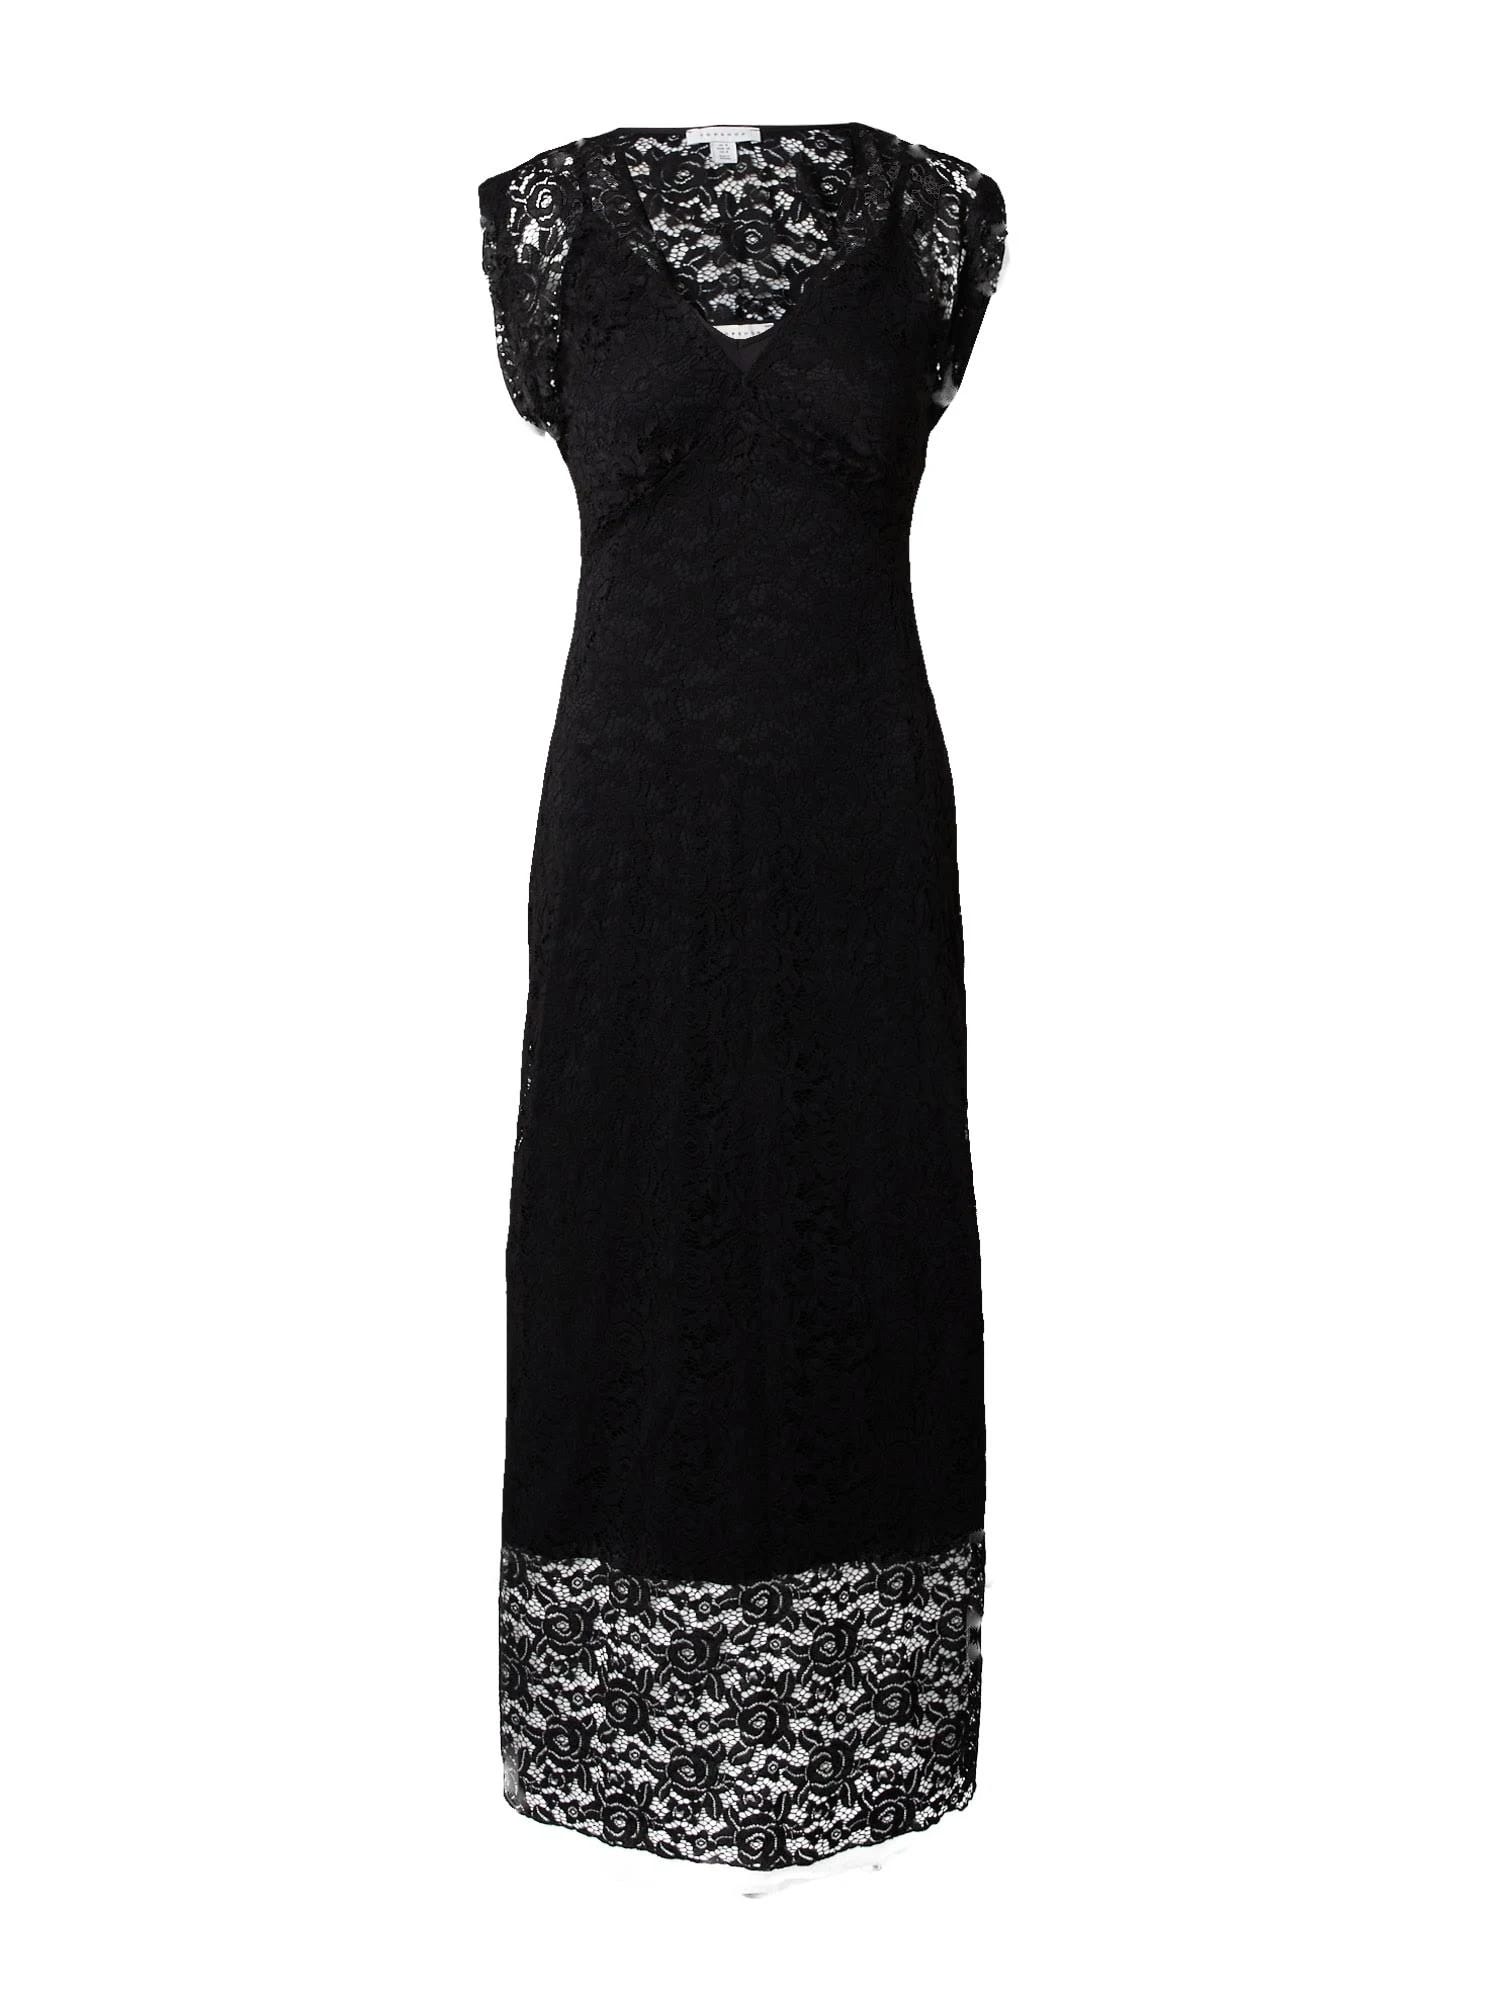 Black Lace V-Neck Cap Sleeve Dress with Elastane Accents | Image